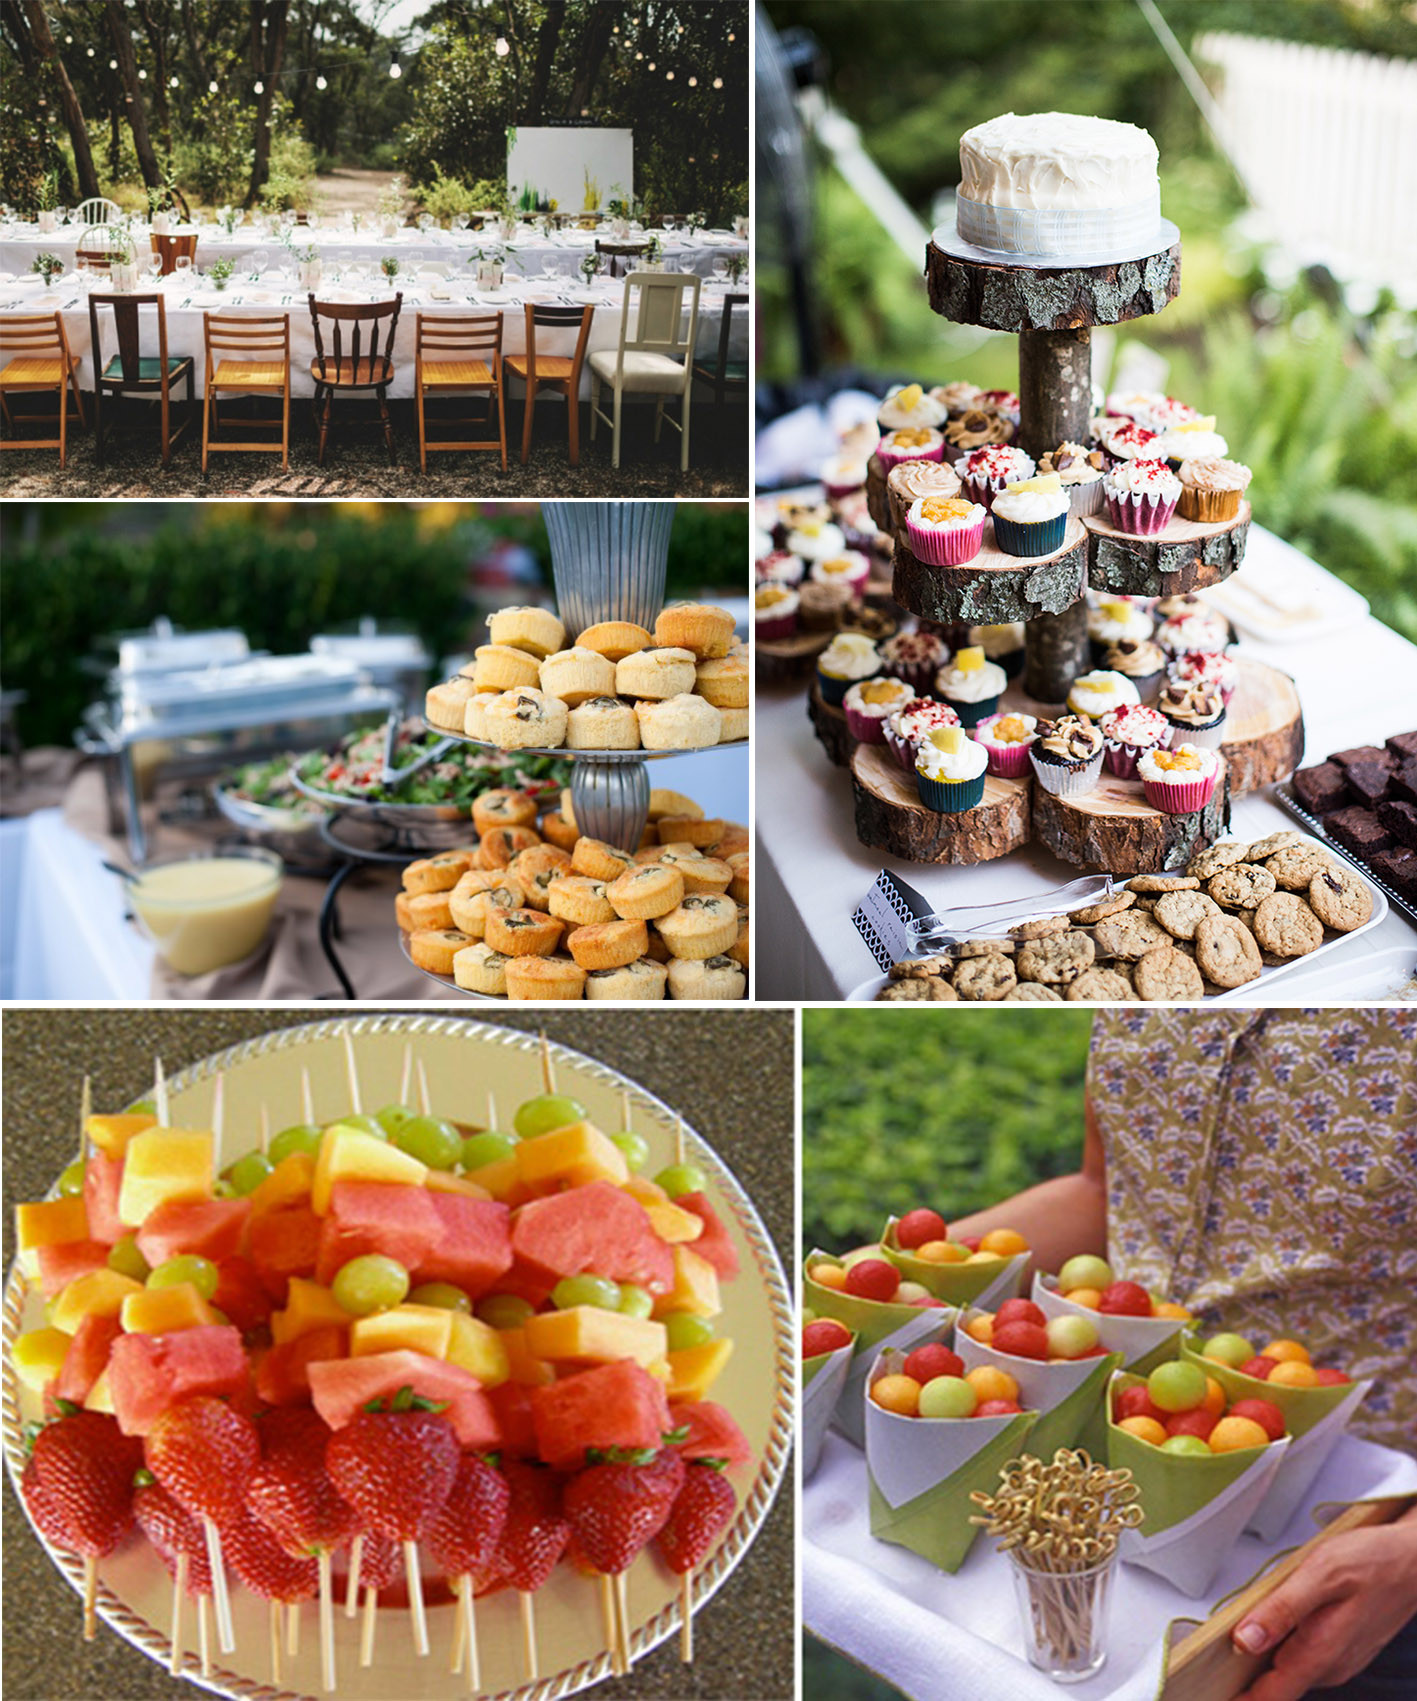 Food Themed Party Ideas
 How to play a backyard themed wedding – lianggeyuan123